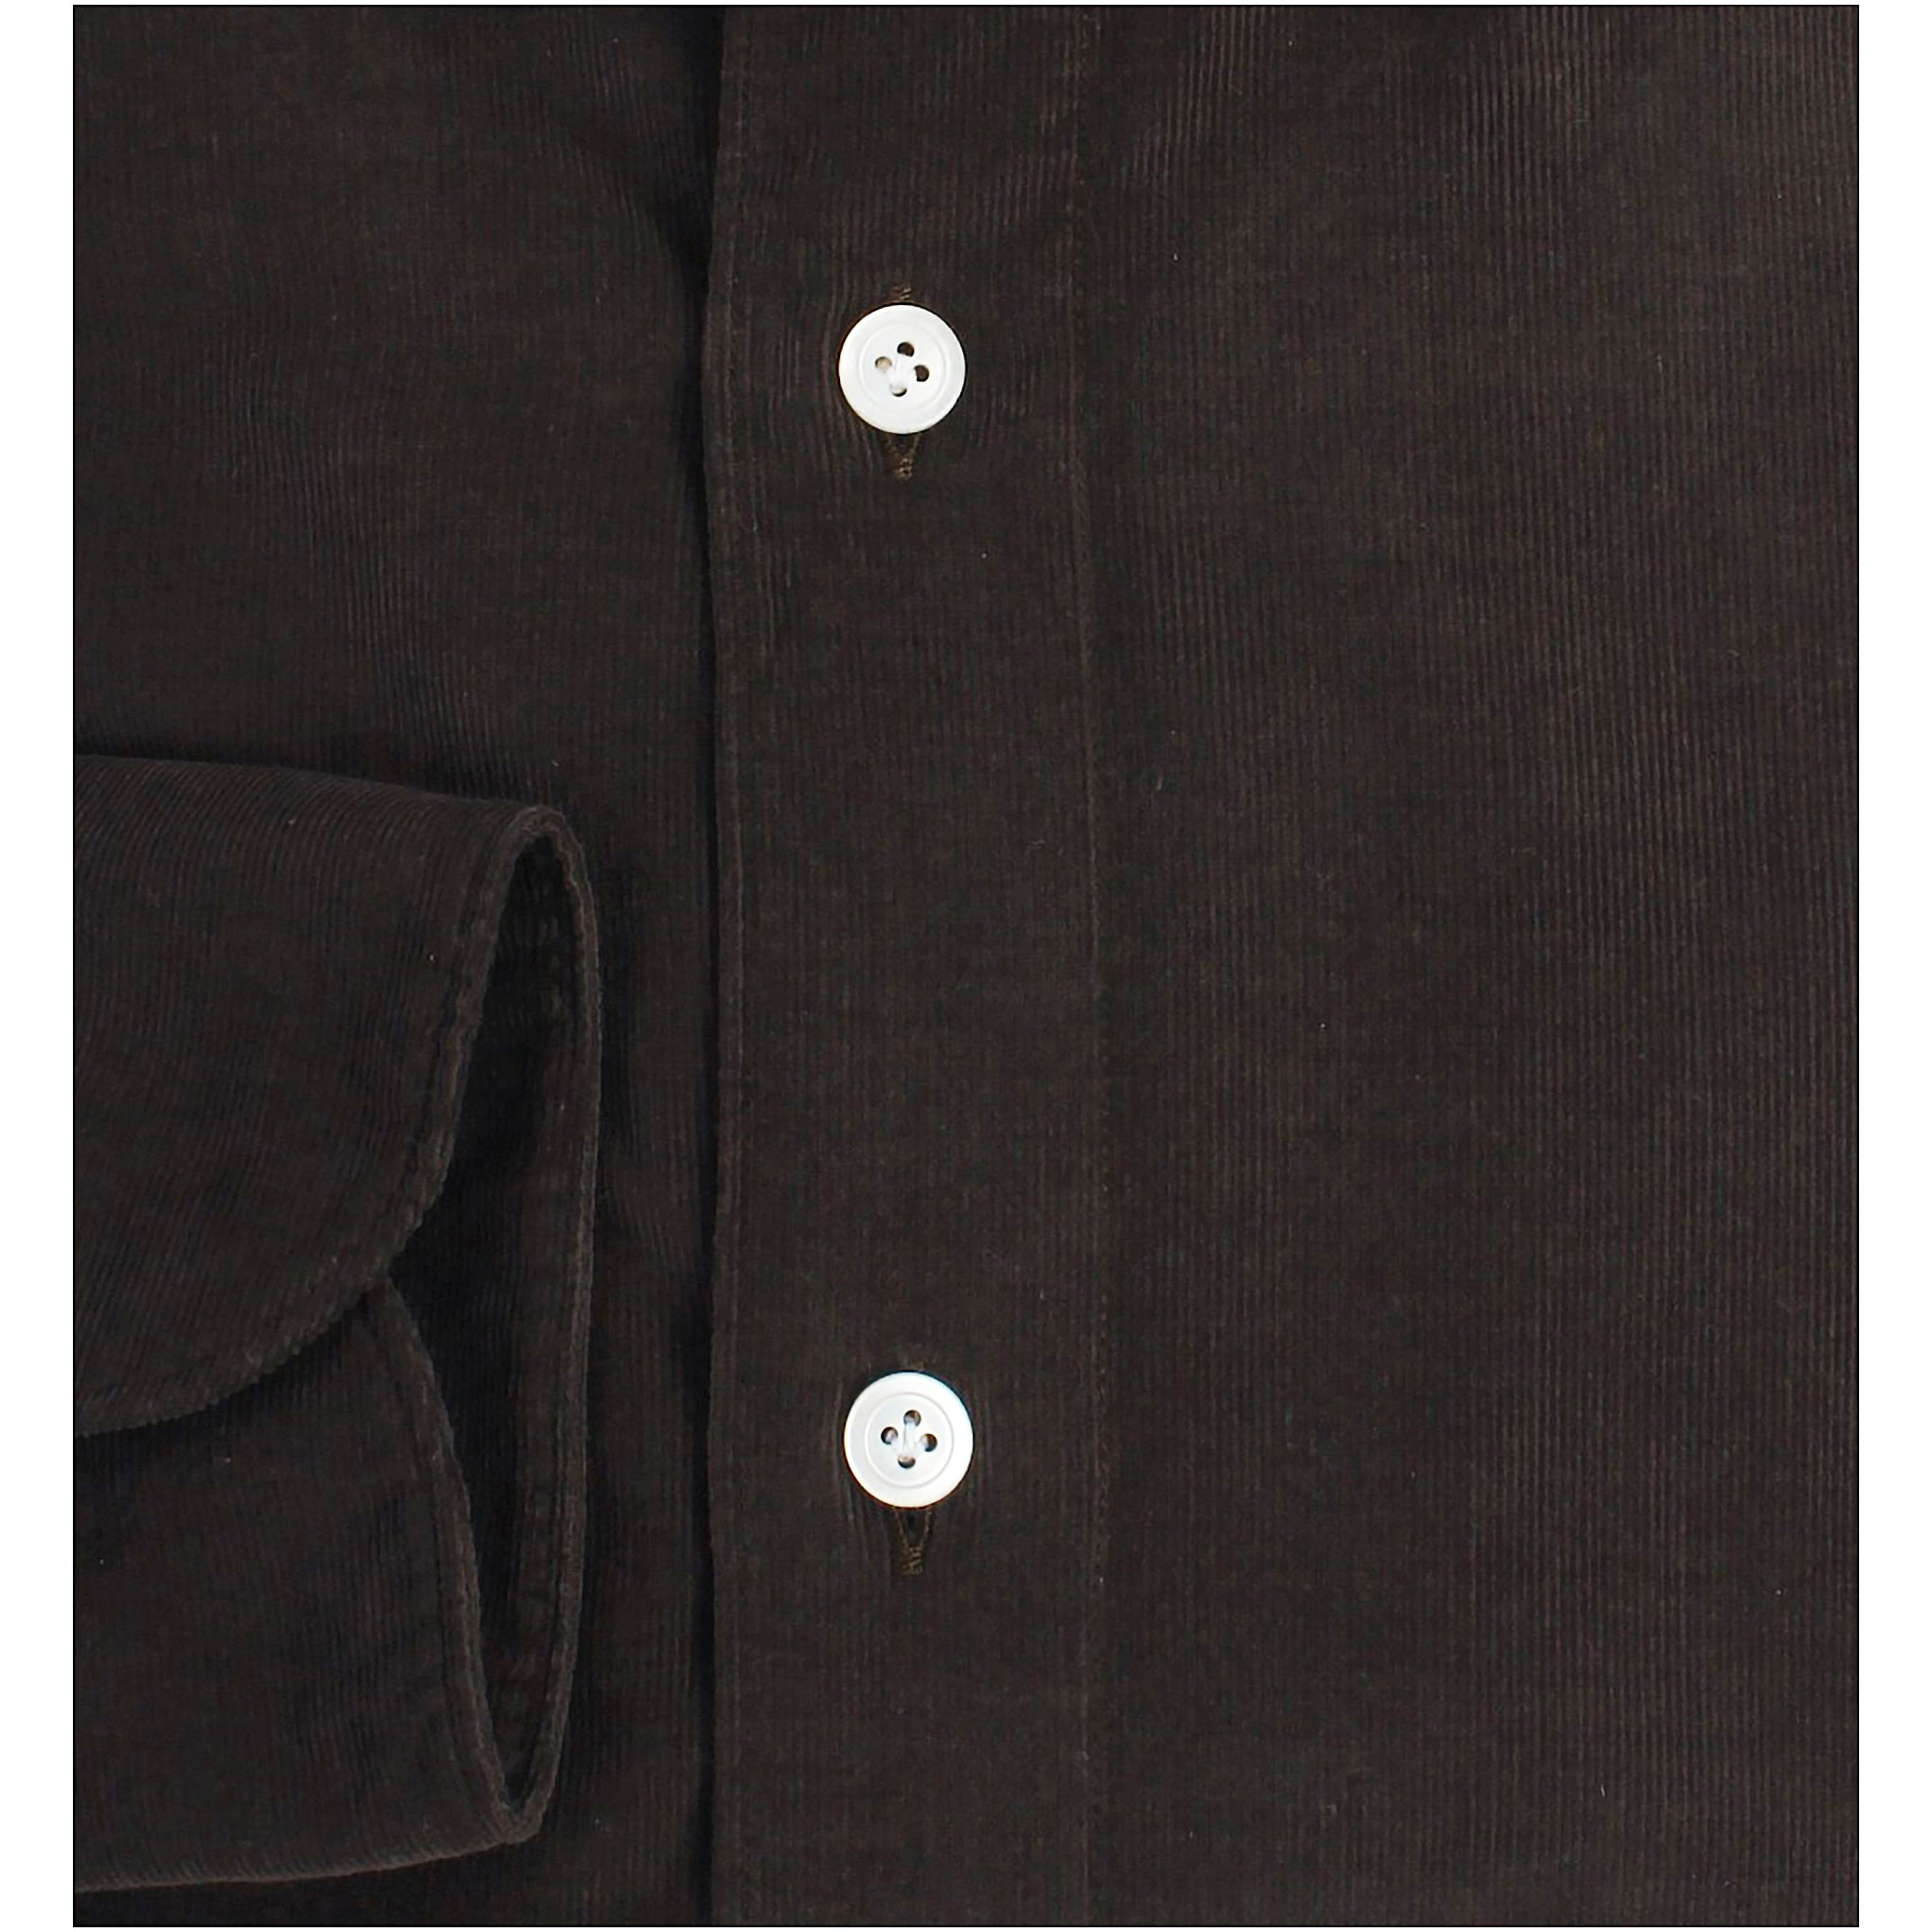 Shirt sport slim fit velvet cotton blue or brown Tokyo Finamore 1925